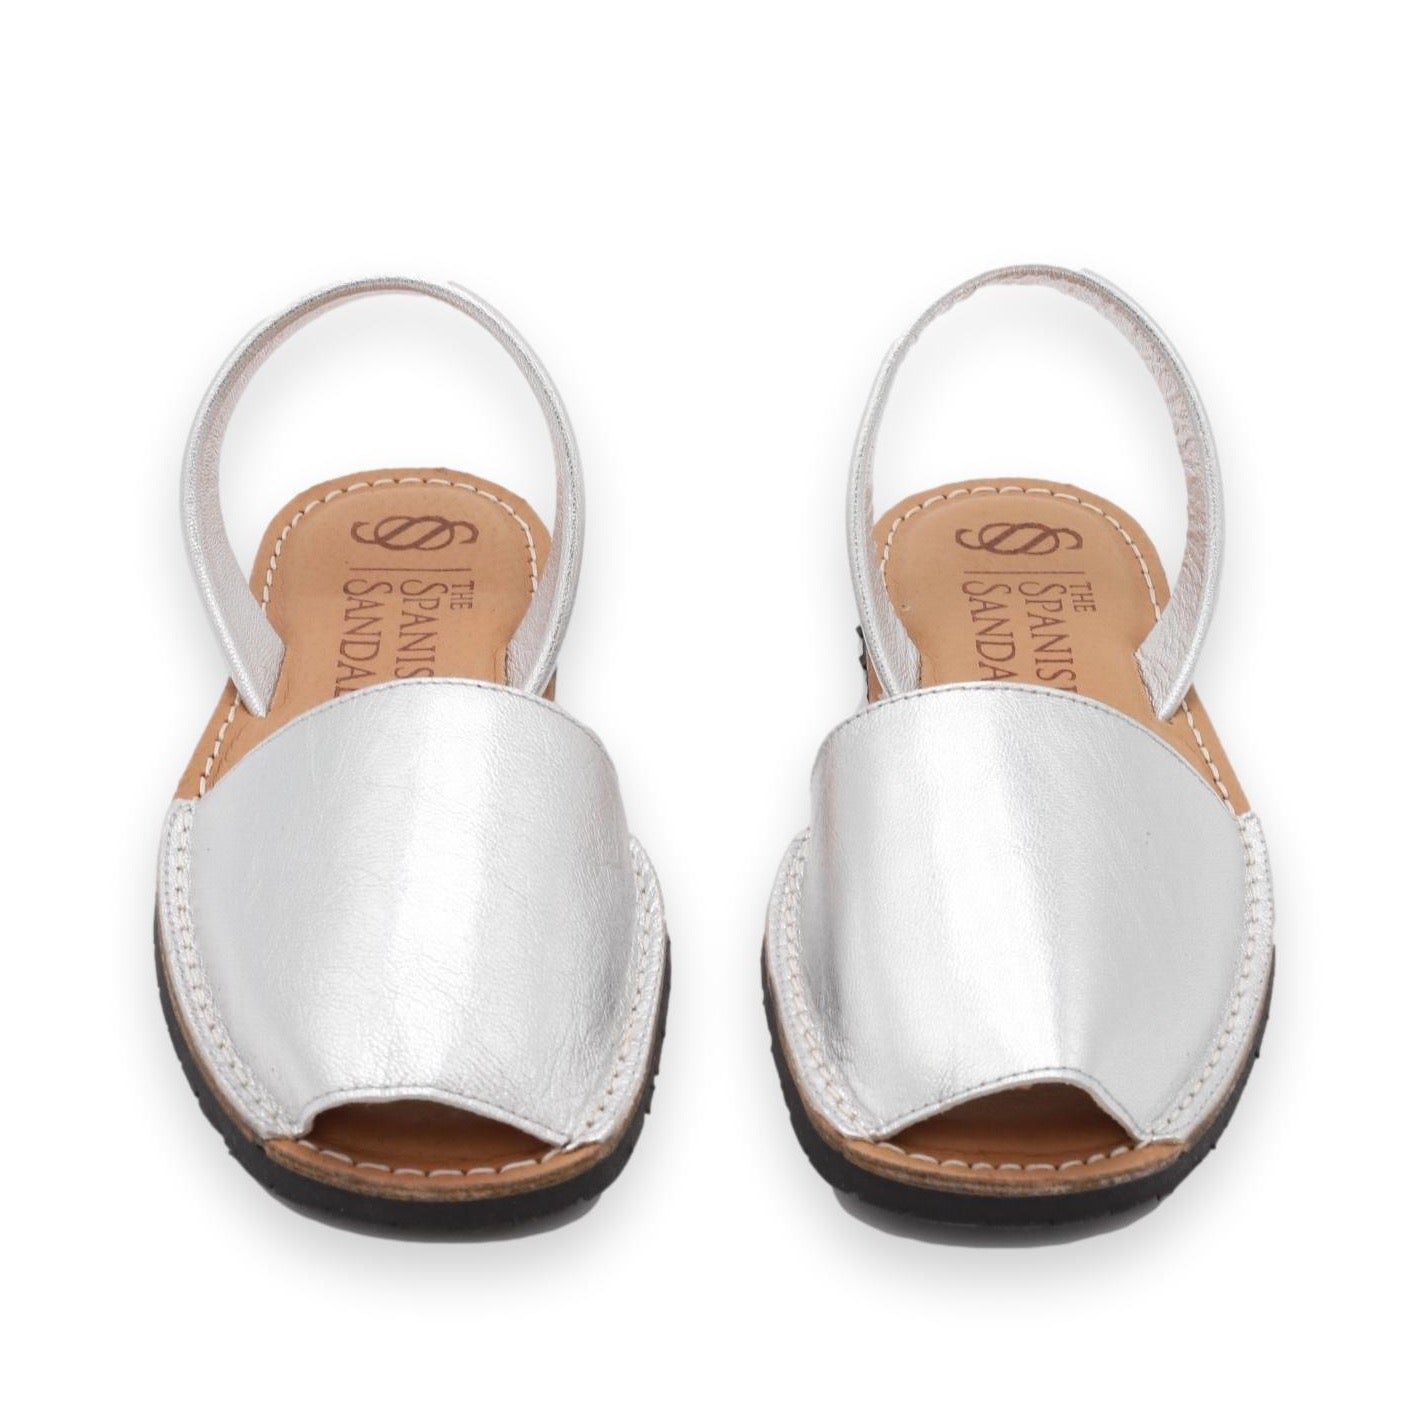 Metallic silver sandals